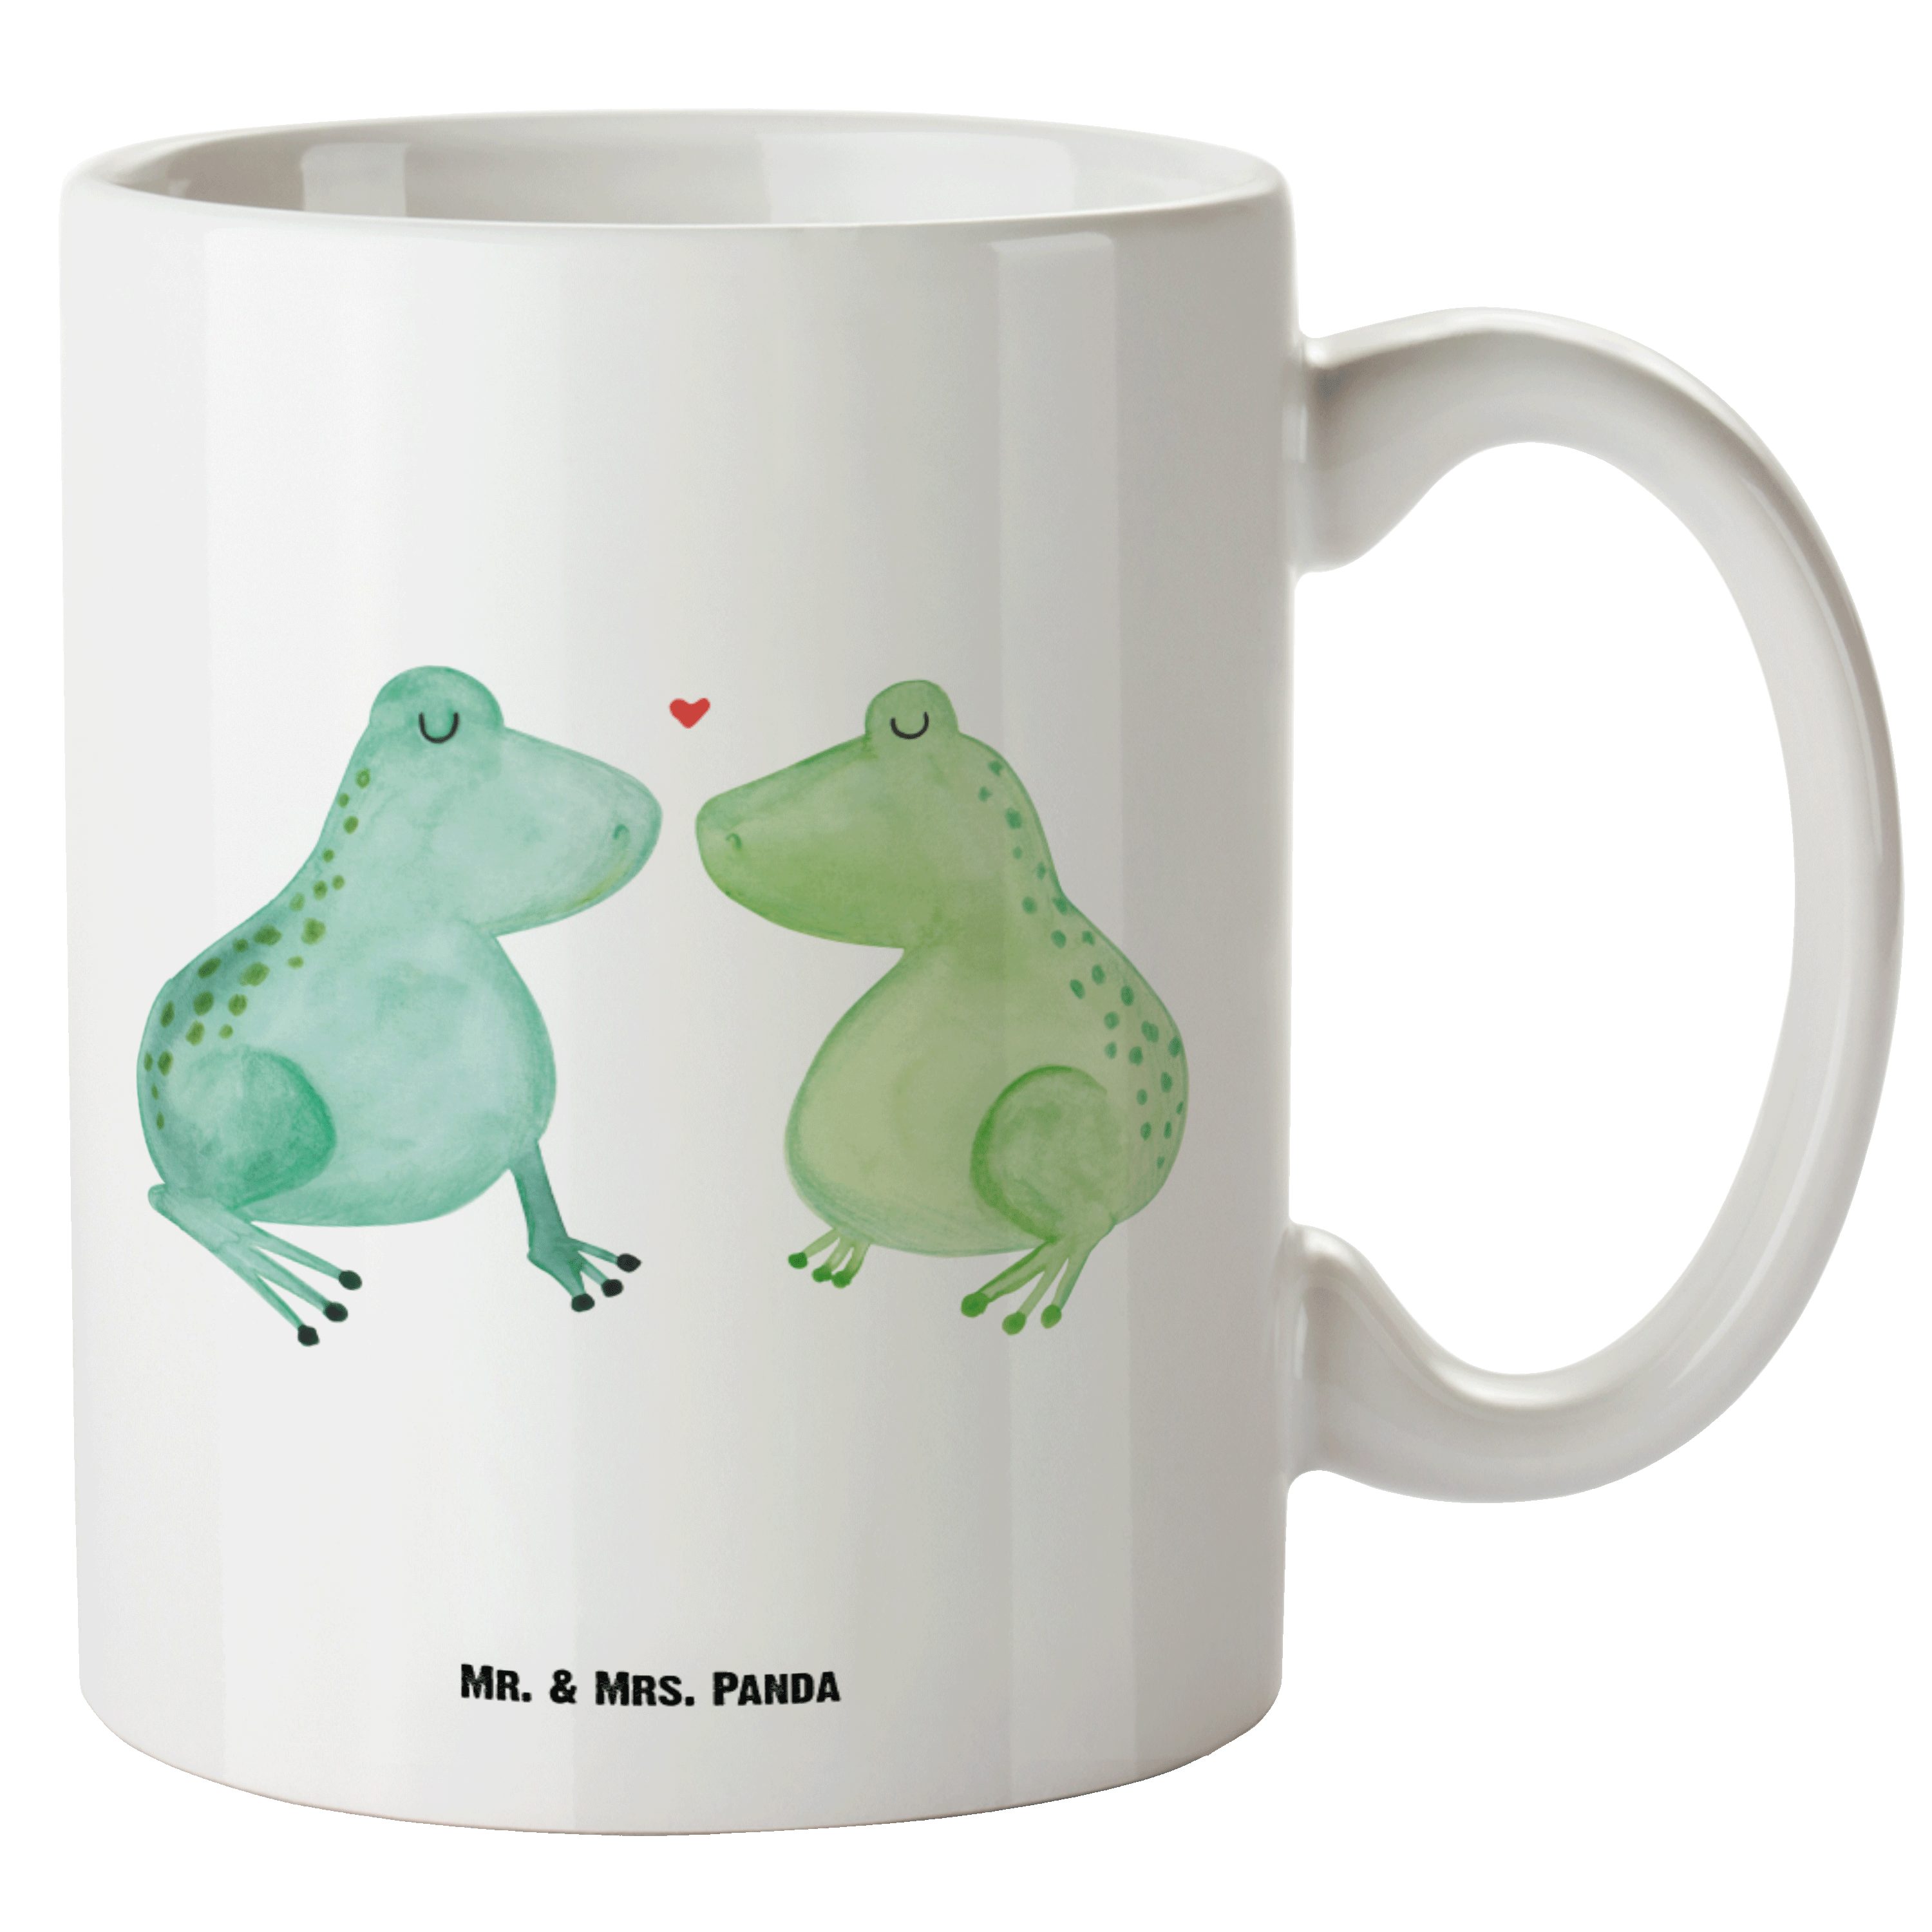 Mr. & Mrs. Panda Tasse Frosch Liebe - Weiß - Geschenk, Geschenk Freund, Grosse Kaffeetasse, XL Tasse Keramik